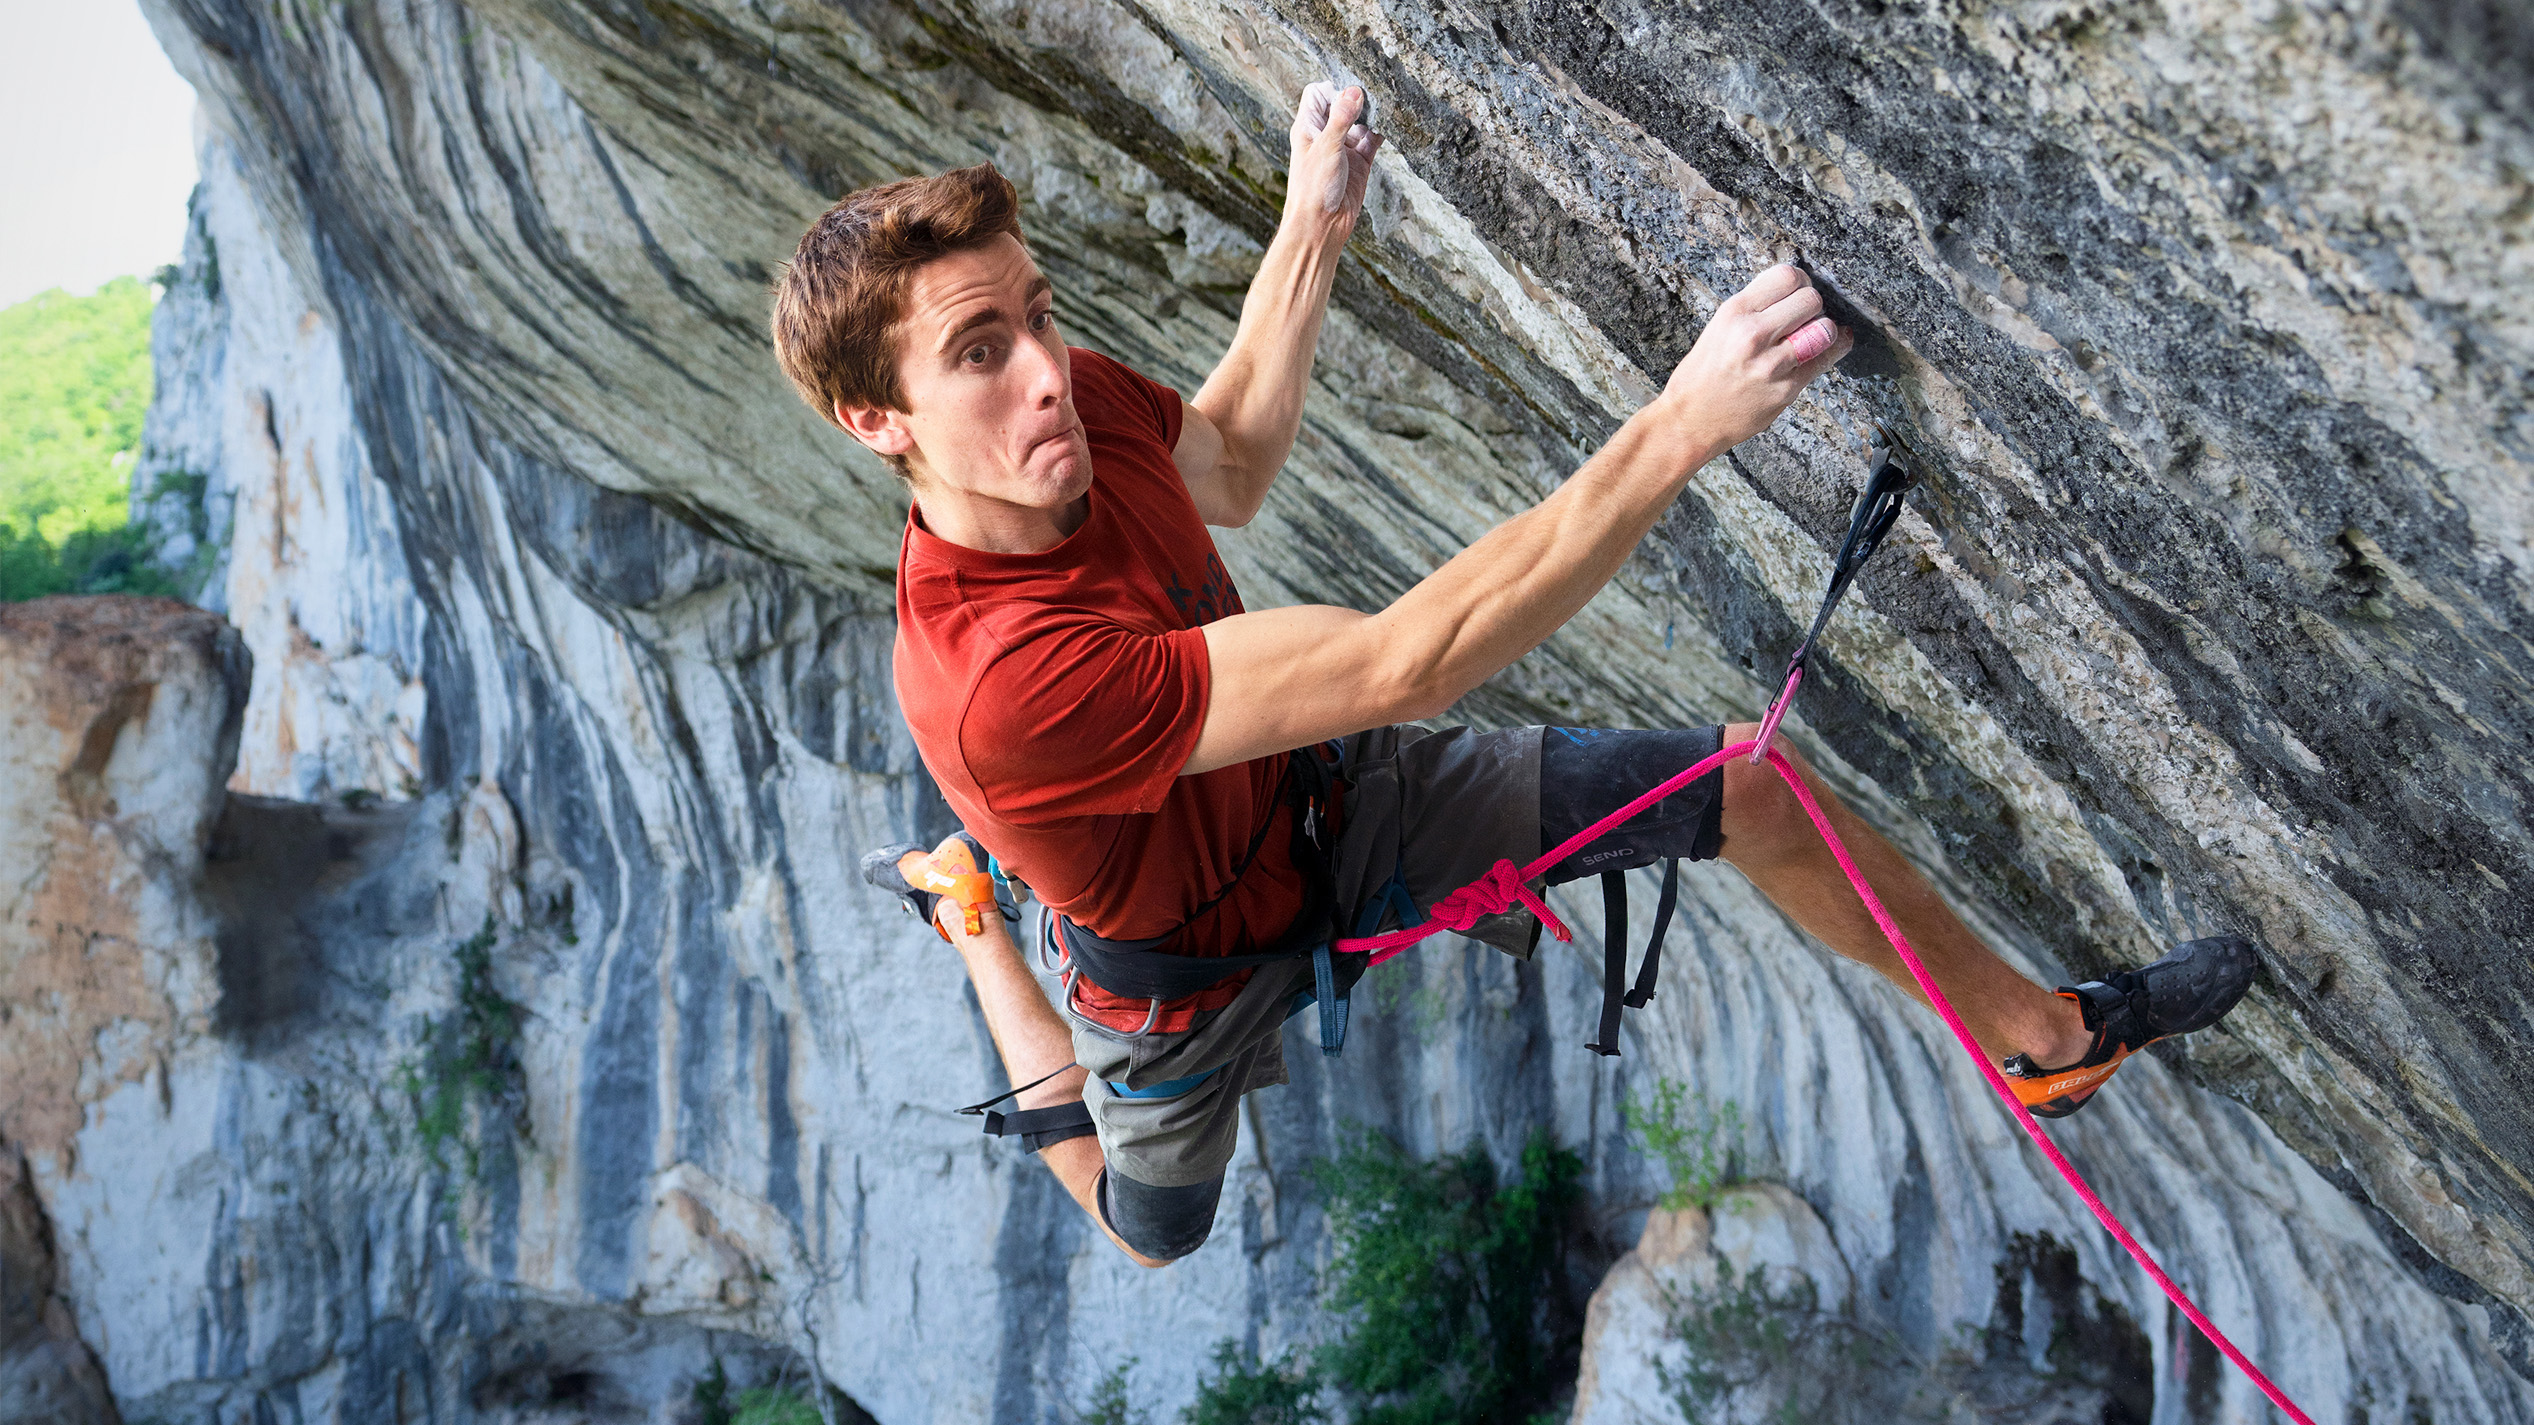 Man climbing on a steep rock face